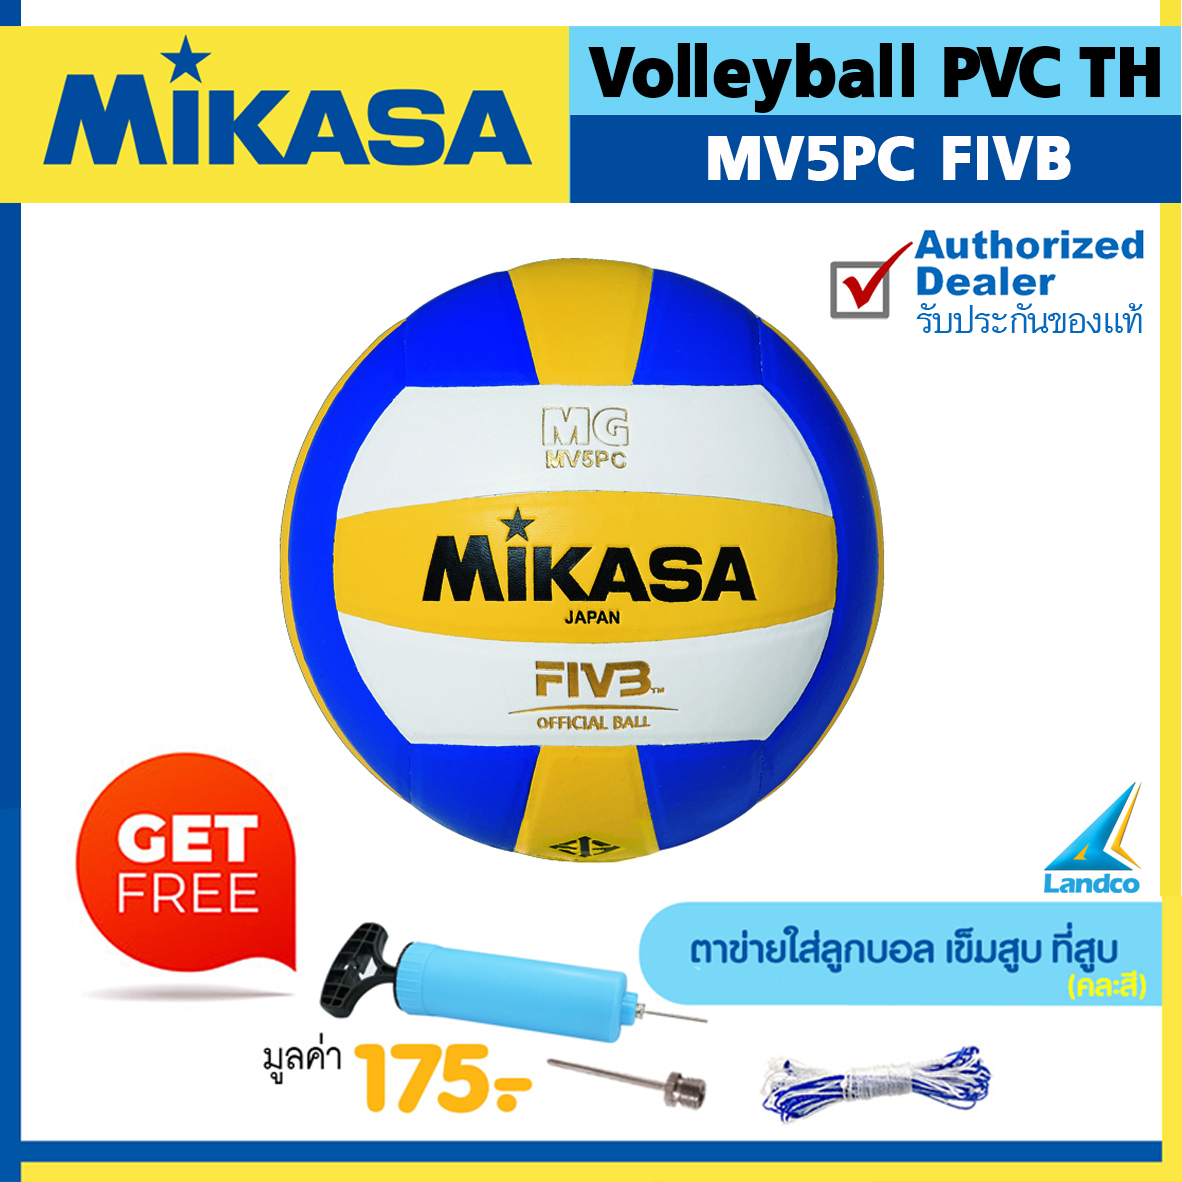 MIKASA ลูกวอลเลย์บอลหนัง Volleyball PVC th MV5PC FIVB(495) (แถมฟรี ตาข่ายใส่ลูกบอล + เข็มสูบ + ที่สูบลมมือ SPL)